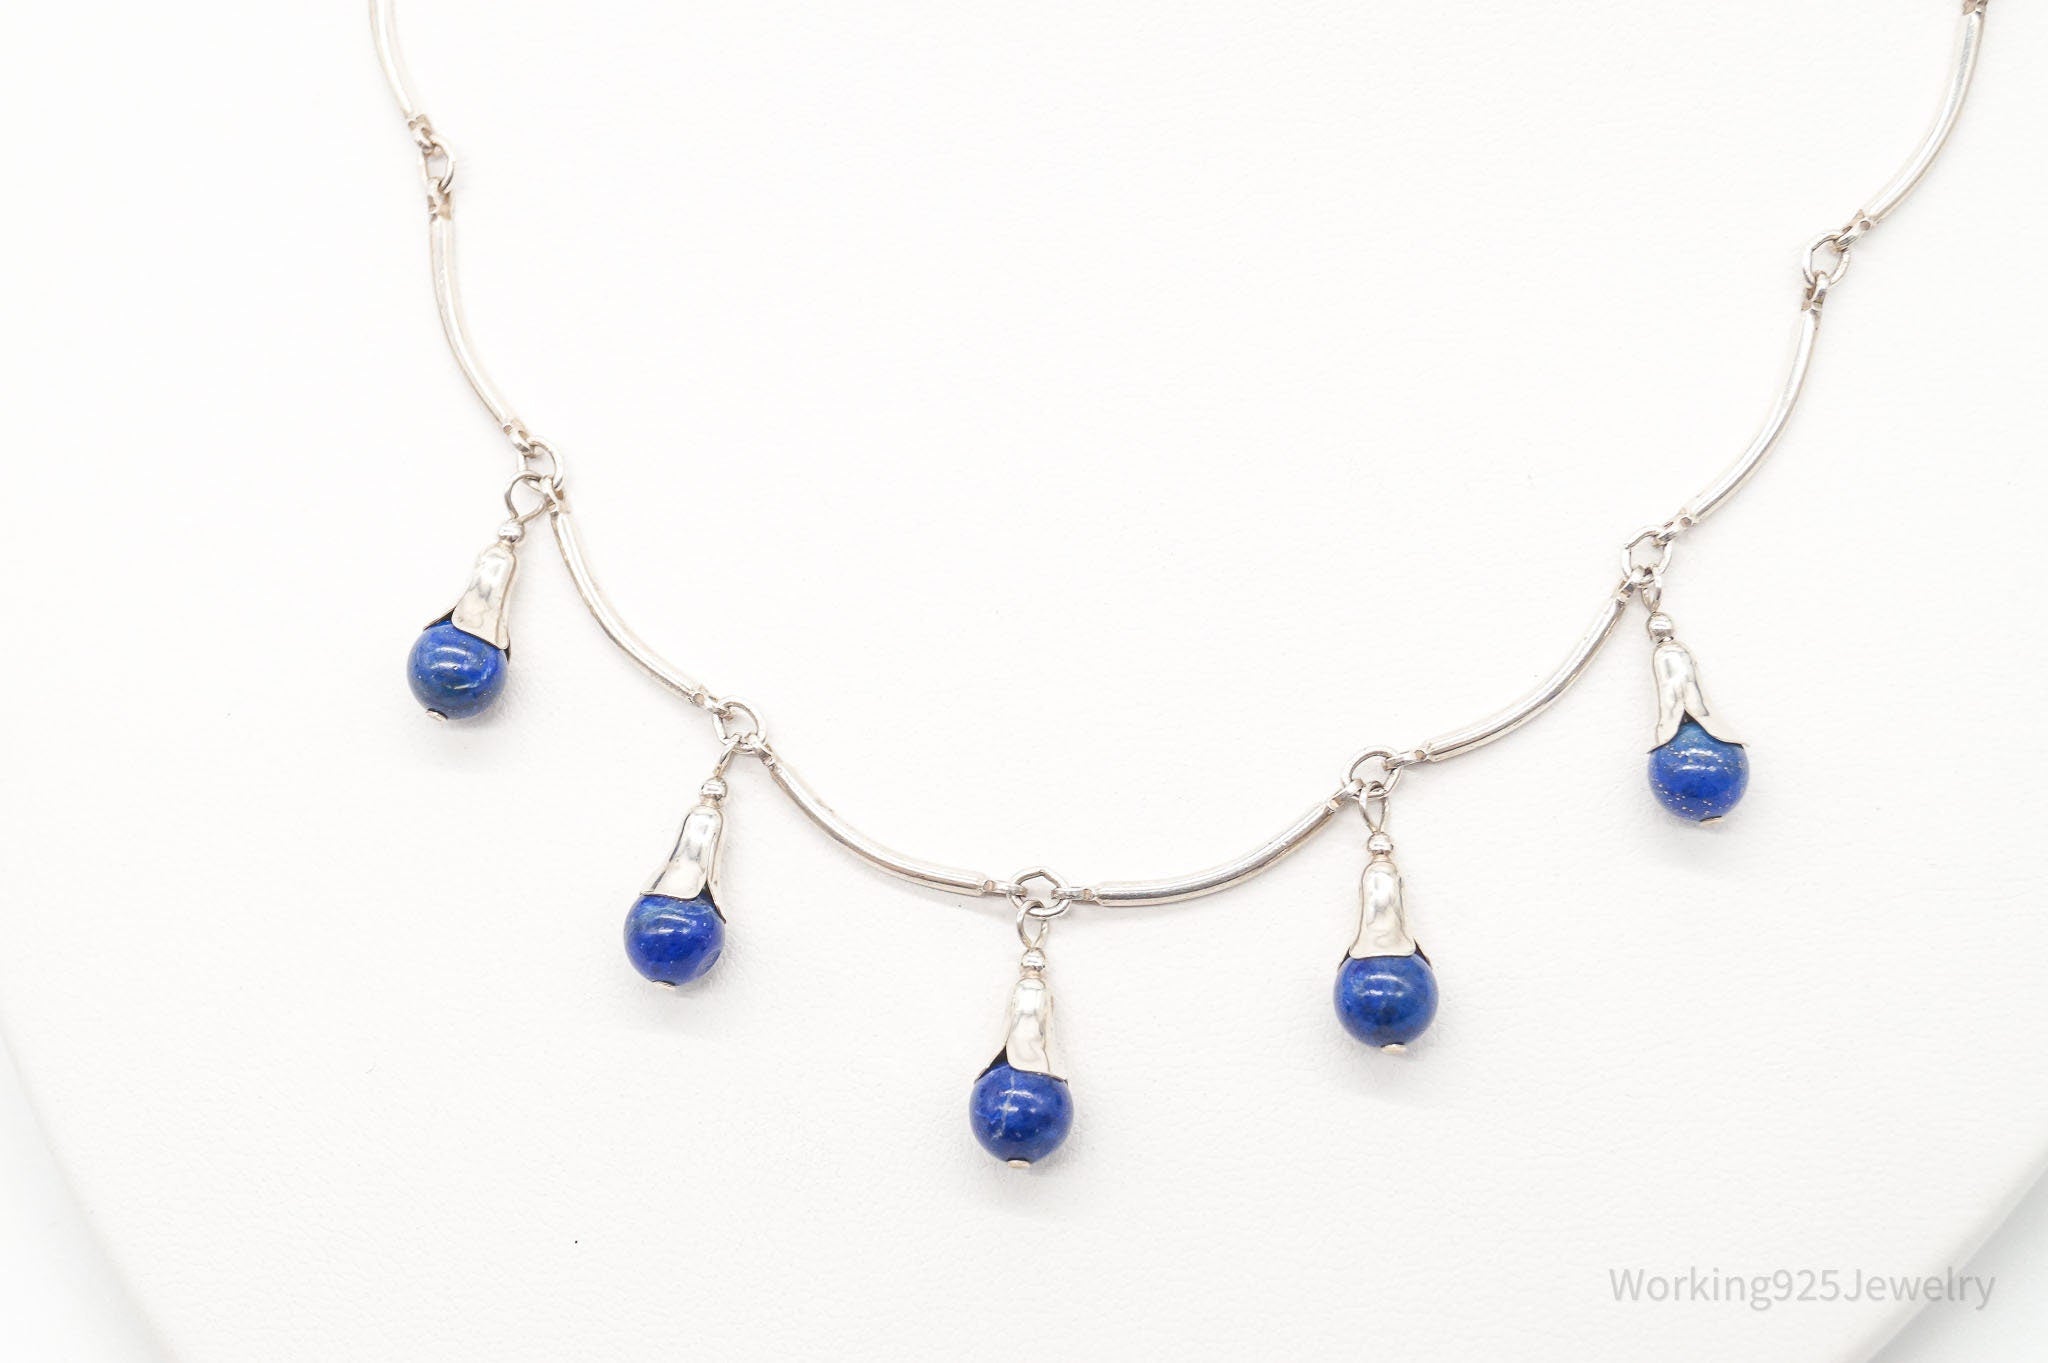 VTG Southwestern Carolyn Pollack Relios Lapis Lazuli Sterling Silver Necklace